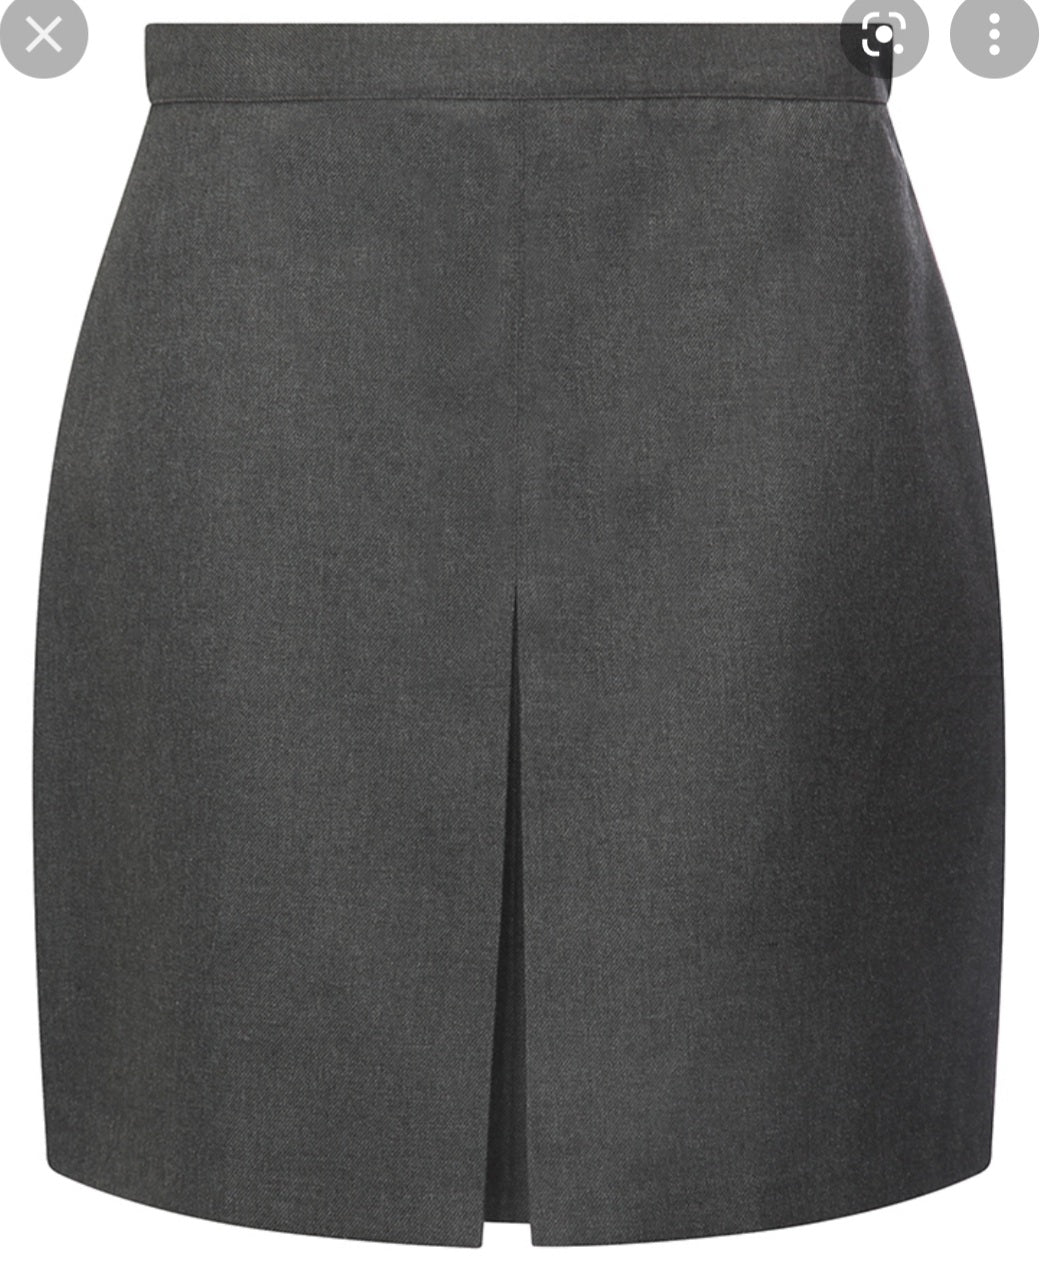 GREY single front pleat skirt